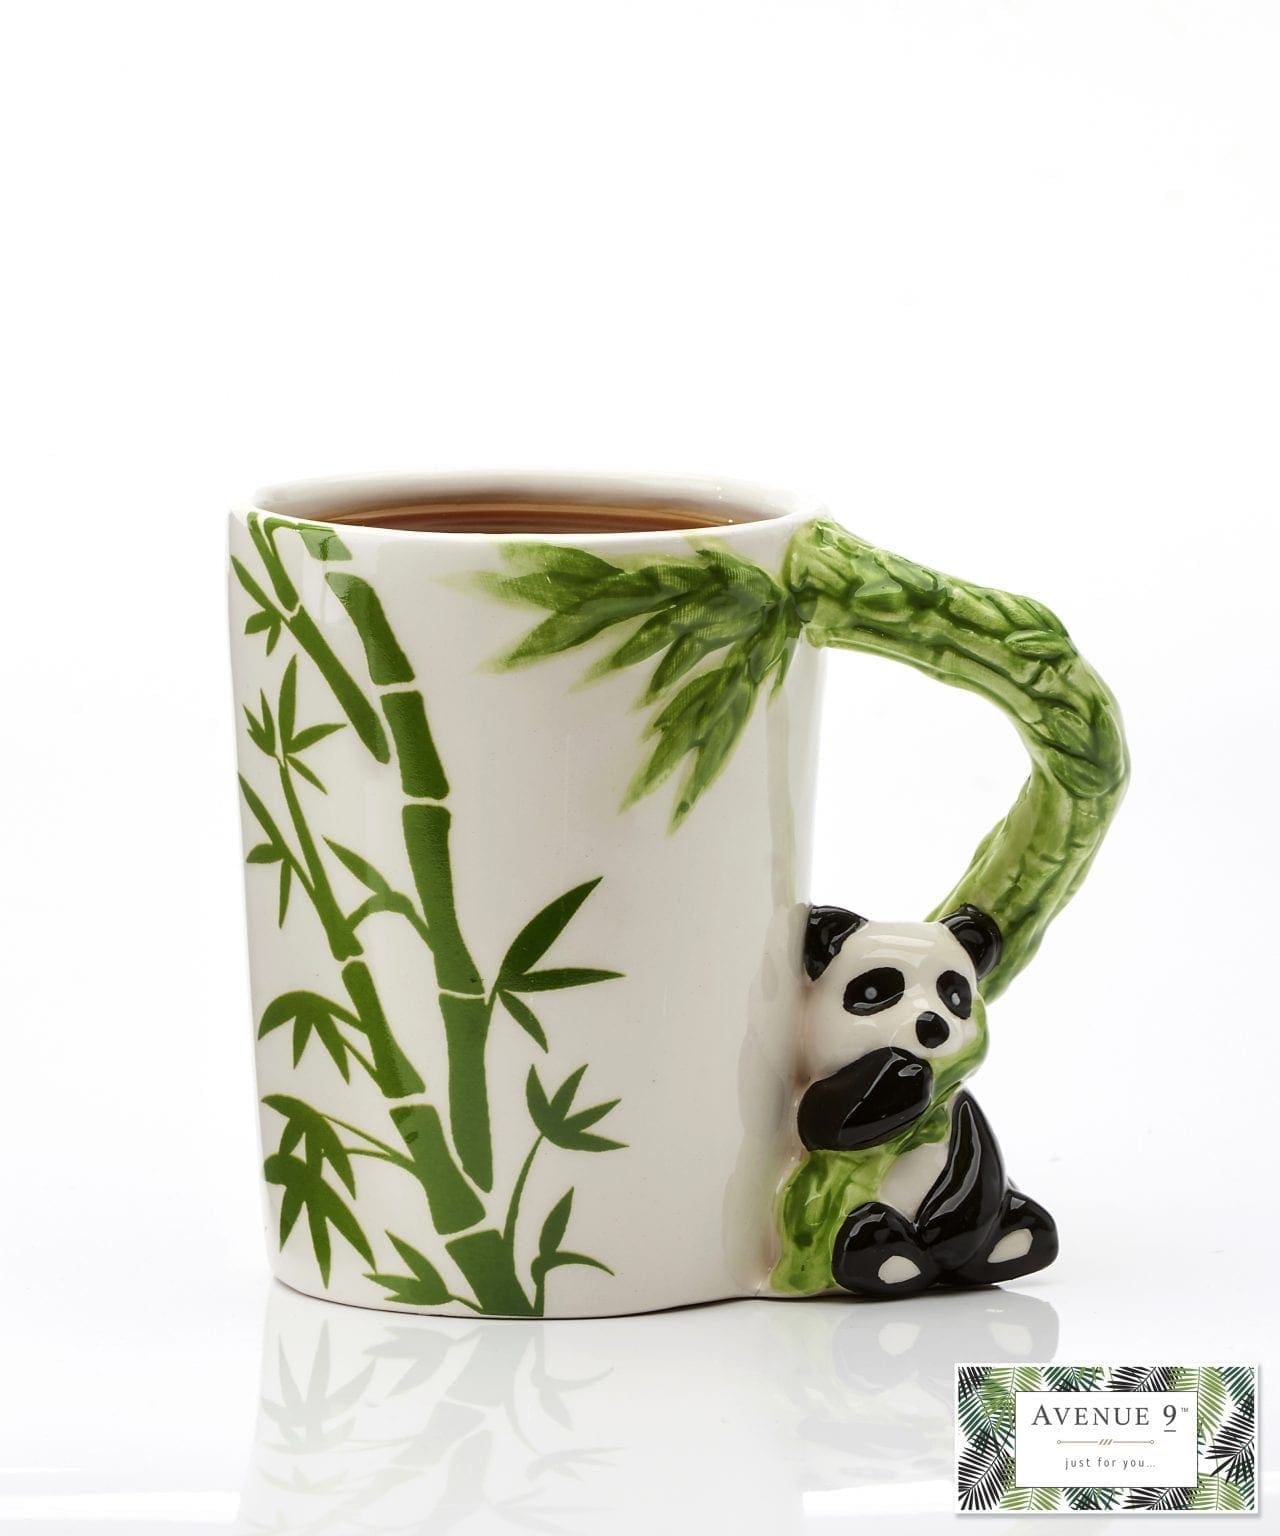 Panda holding handle 13.5 ounce mug by Avenue 9